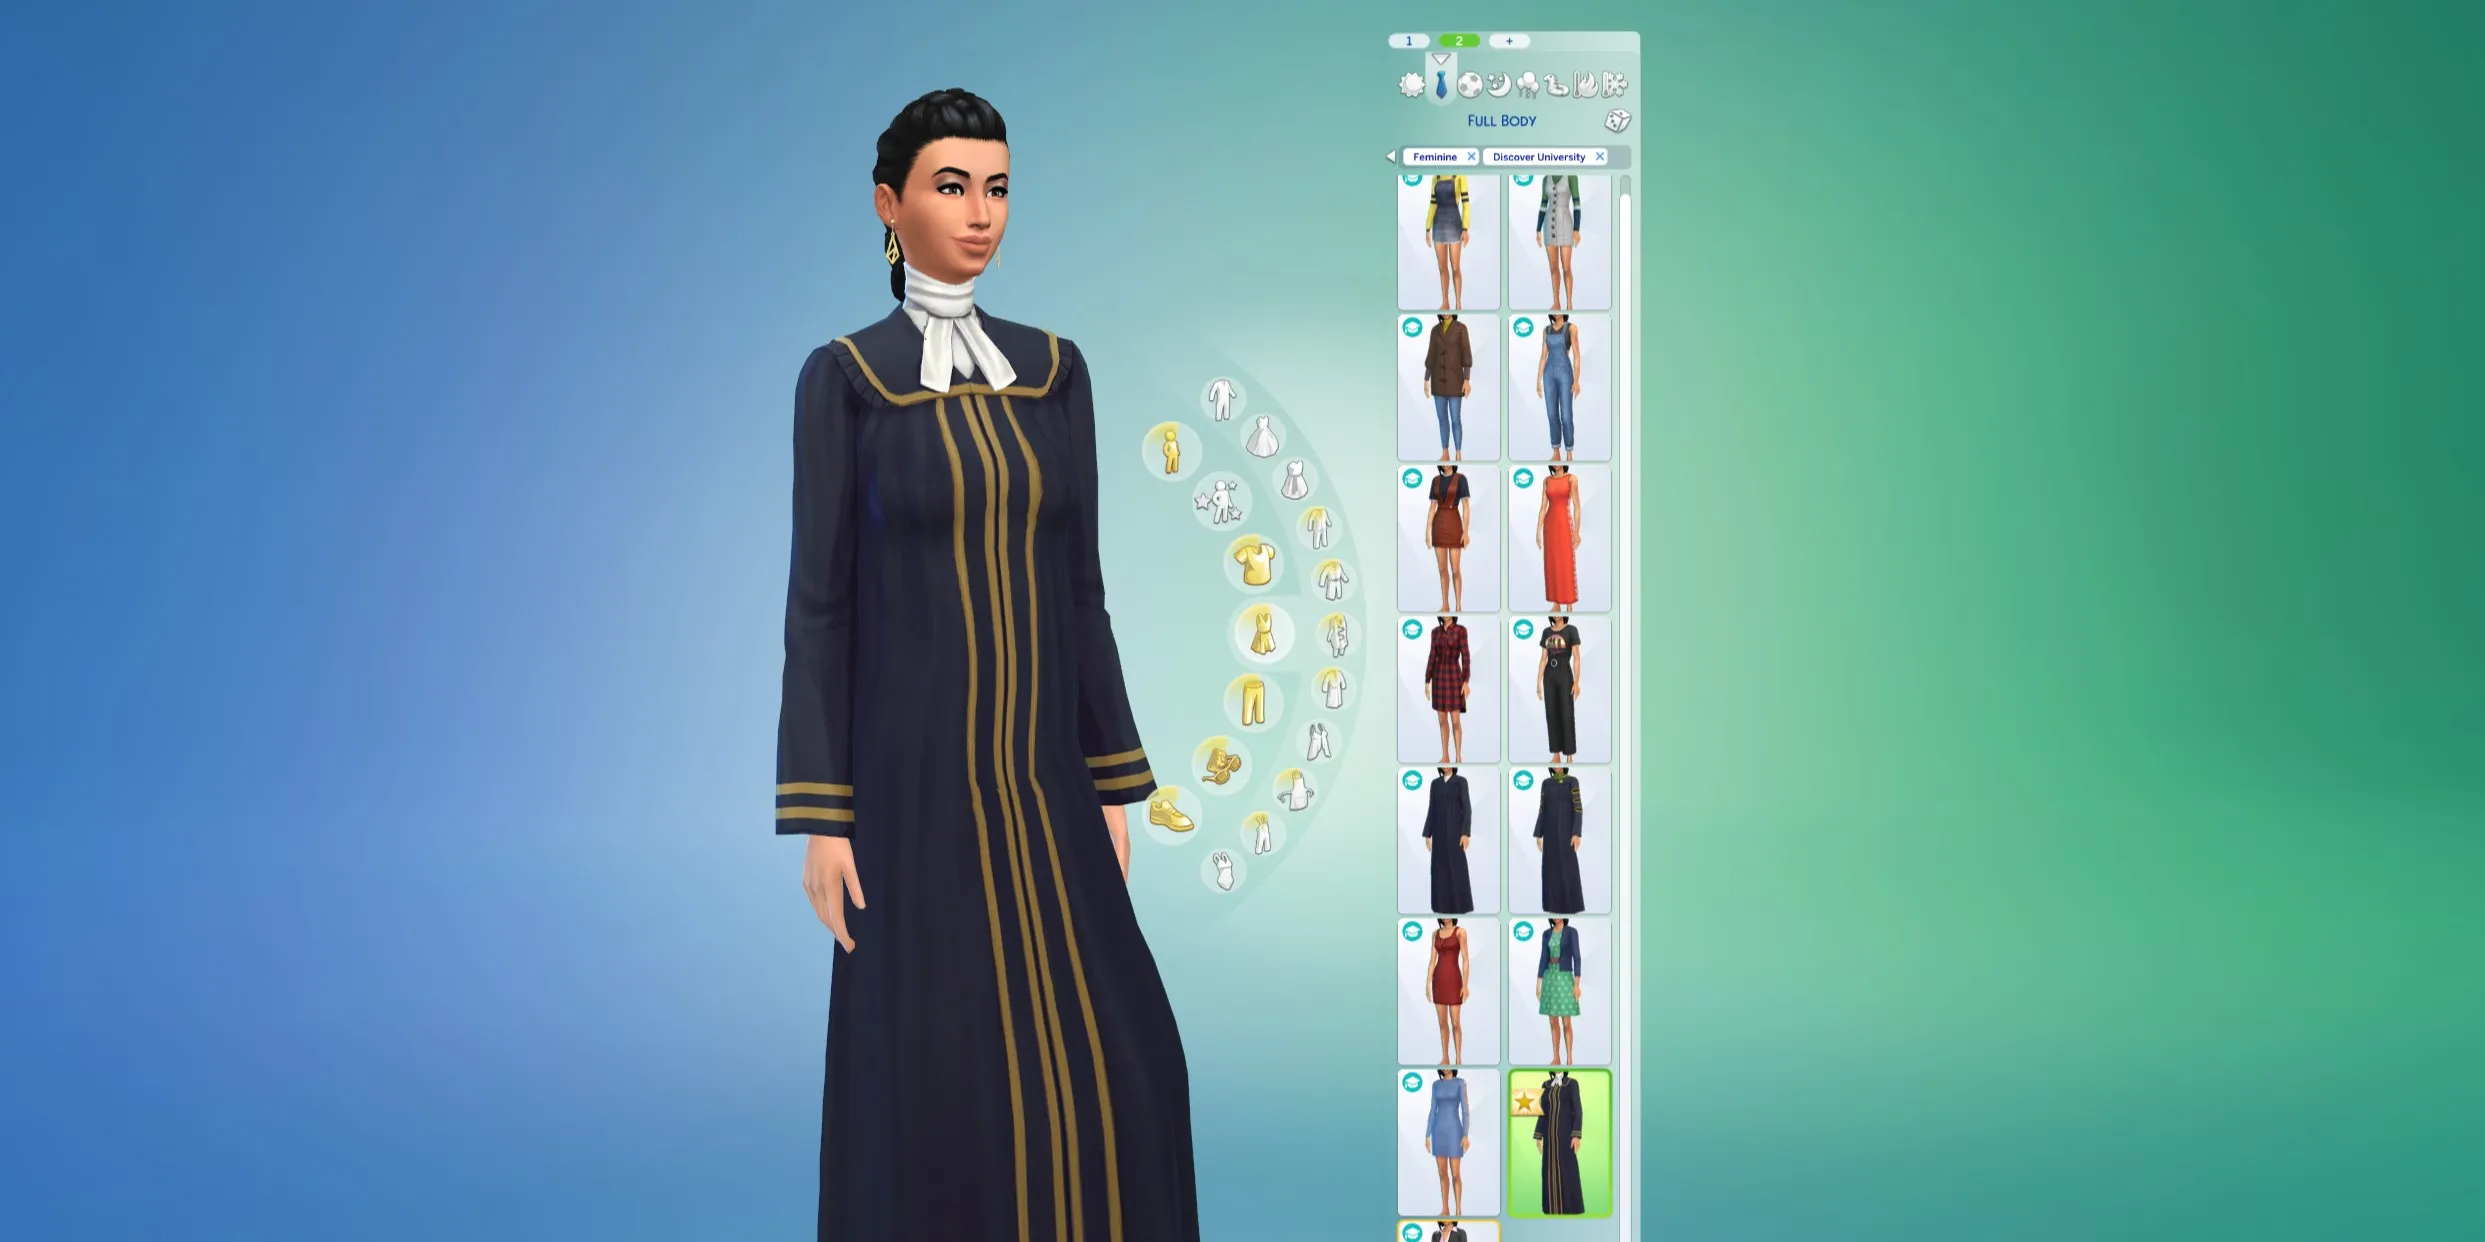 The Sims 4: Изображение Сима в судебной мантии